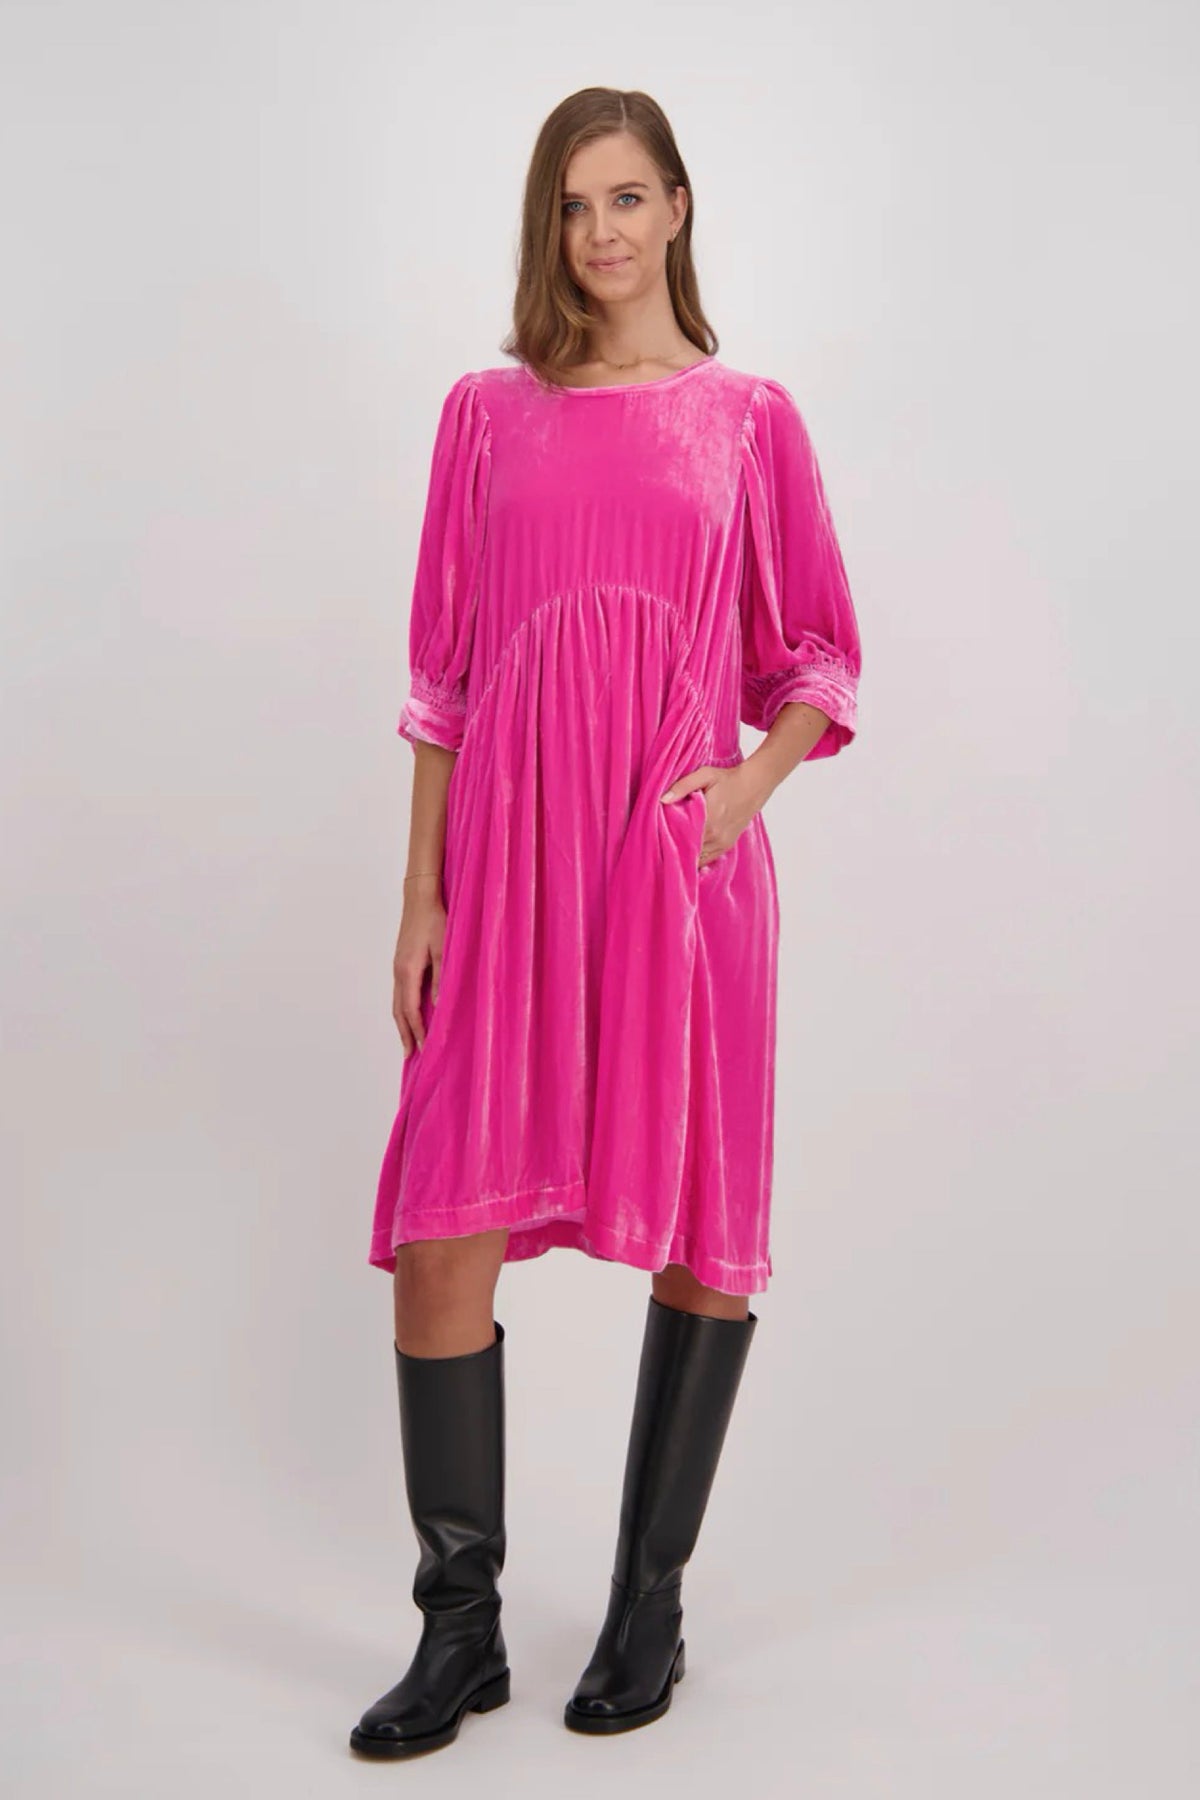 Cleapatra Pink Velvet Dress